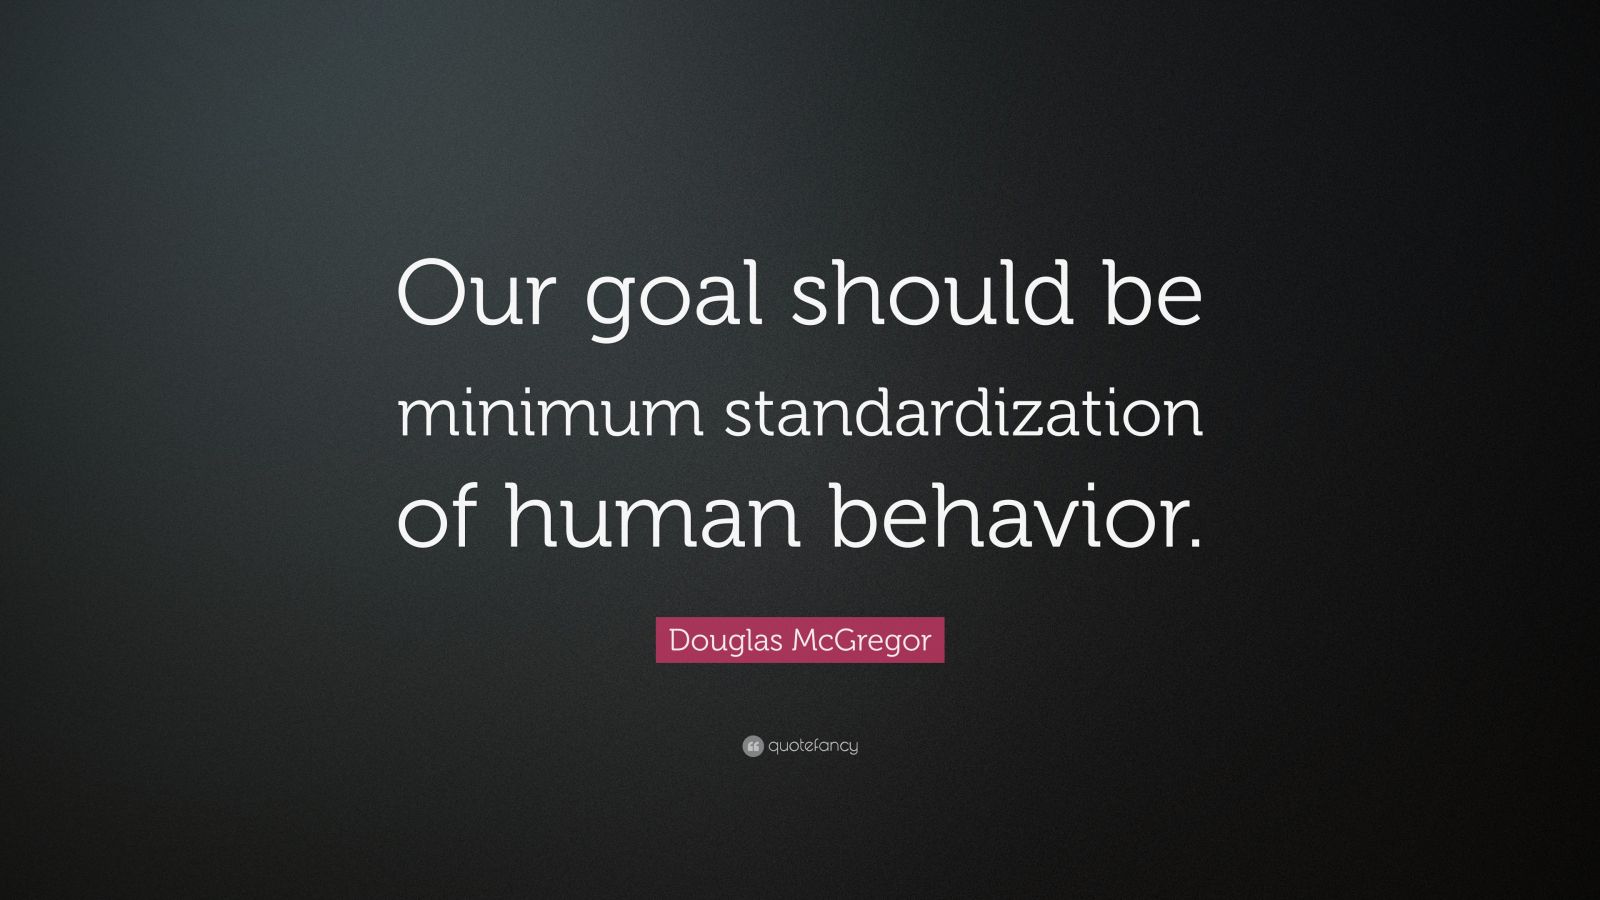 Douglas McGregor Quote: “Our goal should be minimum standardization of